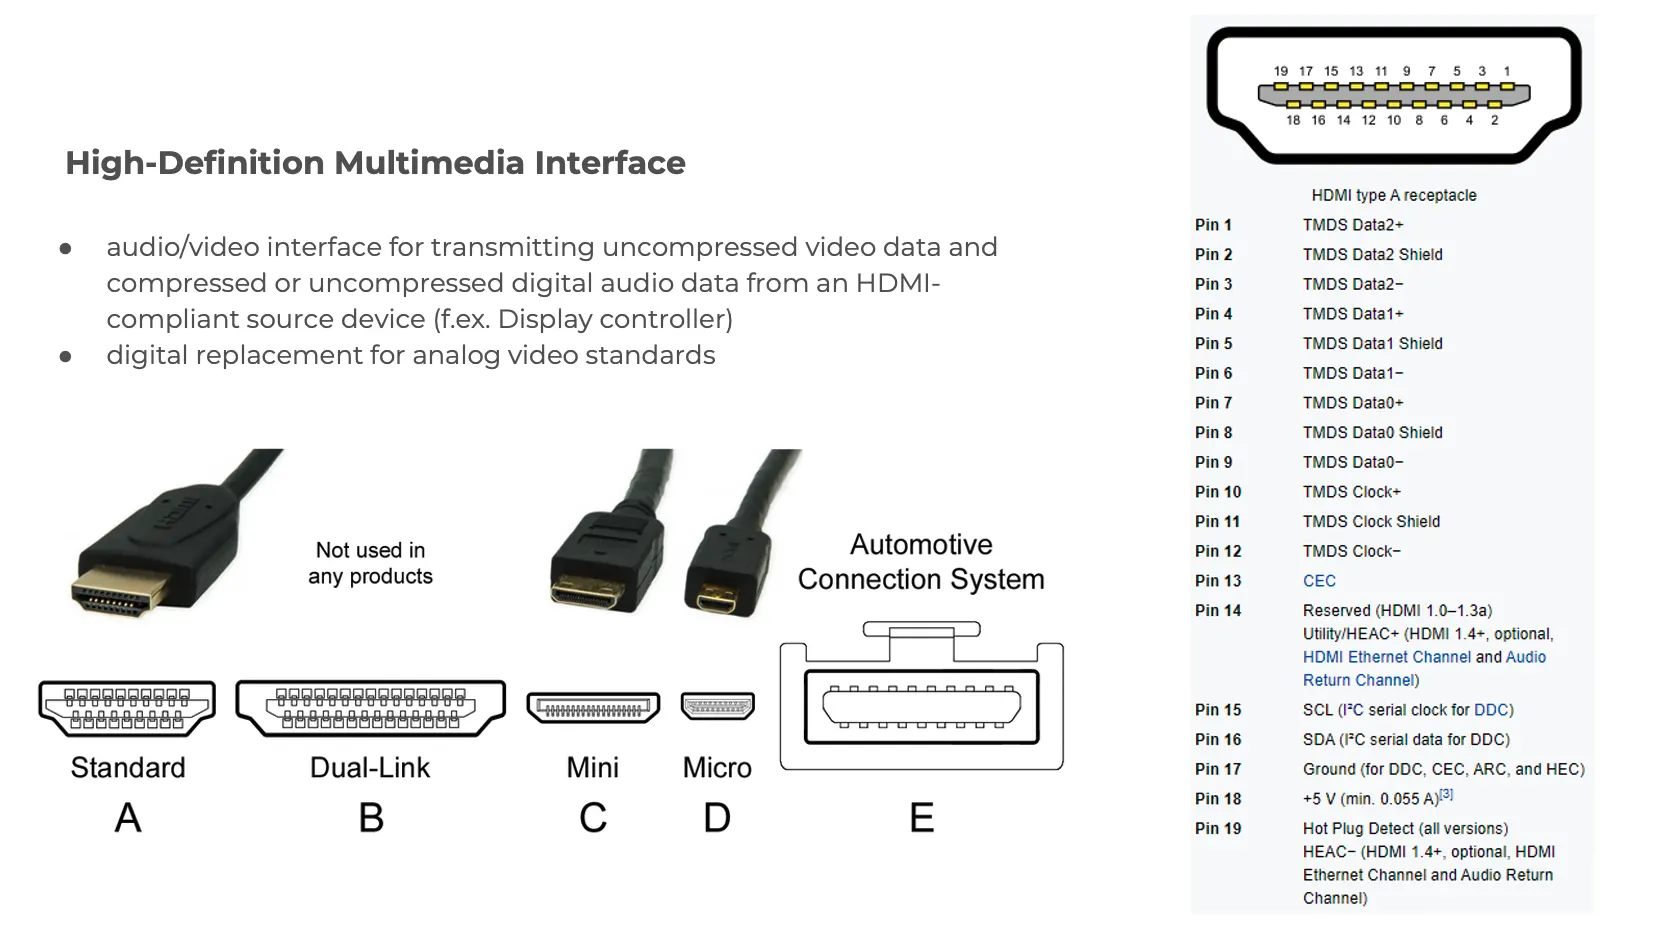 HDMI image external interface